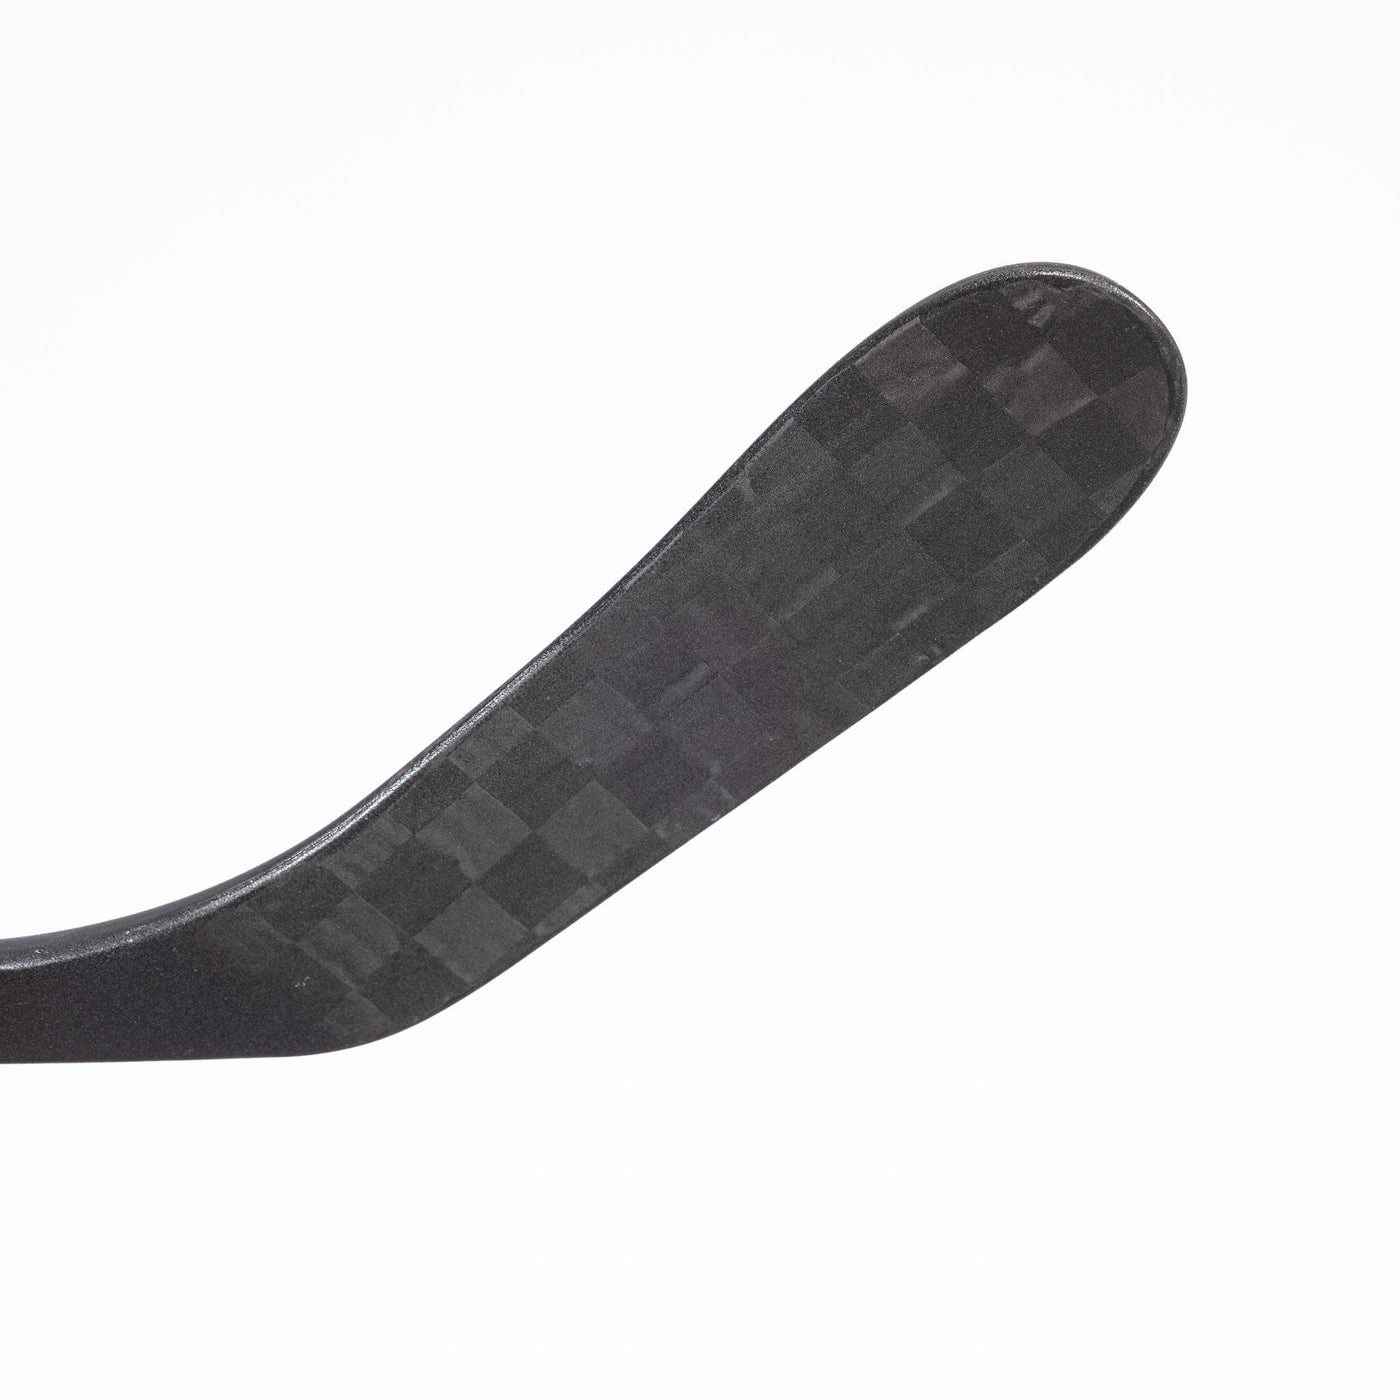 TRUE Catalyst Pro Senior Hockey Stick - The Hockey Shop Source For Sports